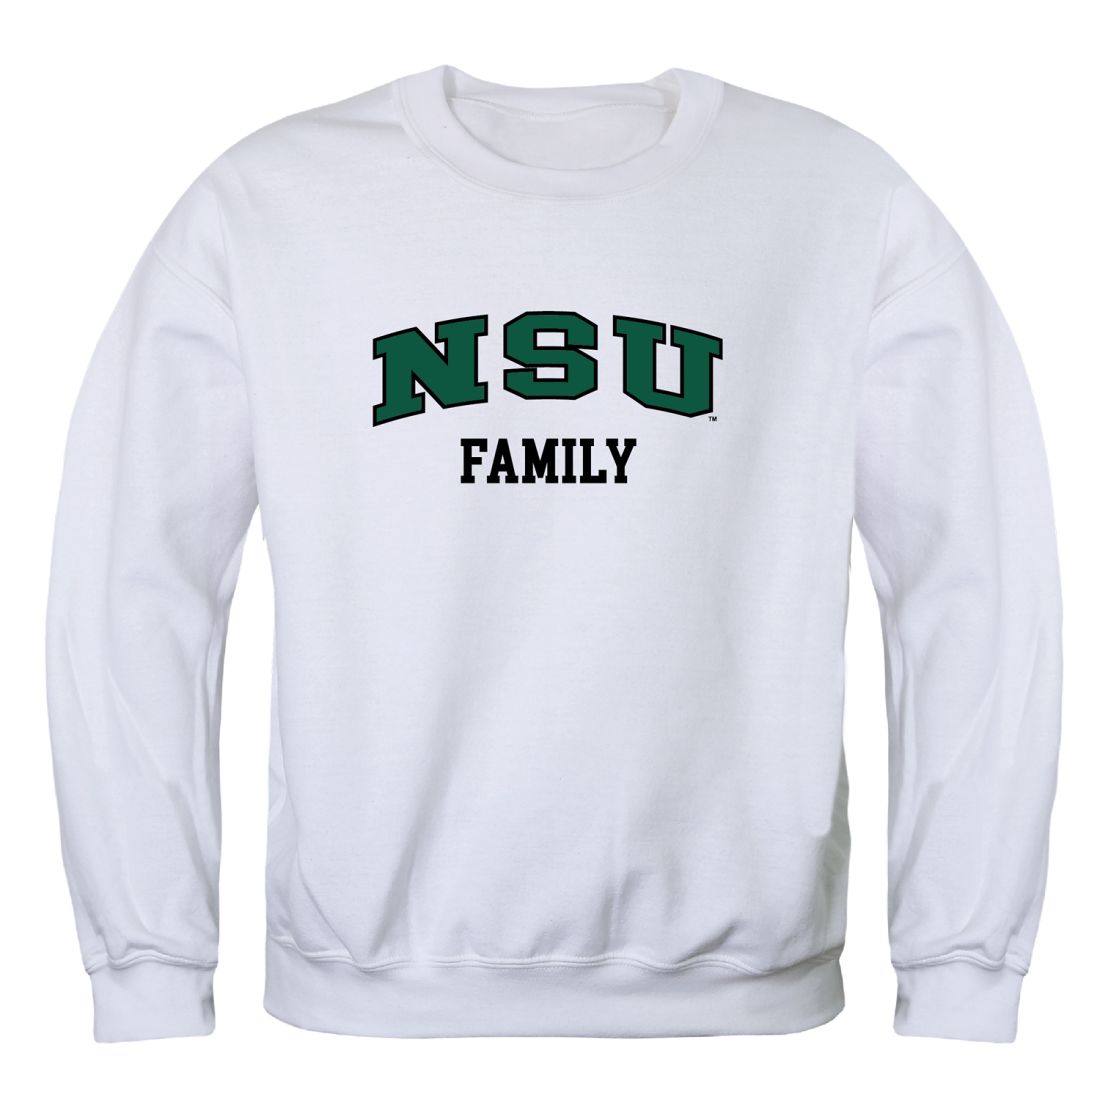 NSU-Northeastern-State-University-RiverHawks-Family-Fleece-Crewneck-Pullover-Sweatshirt